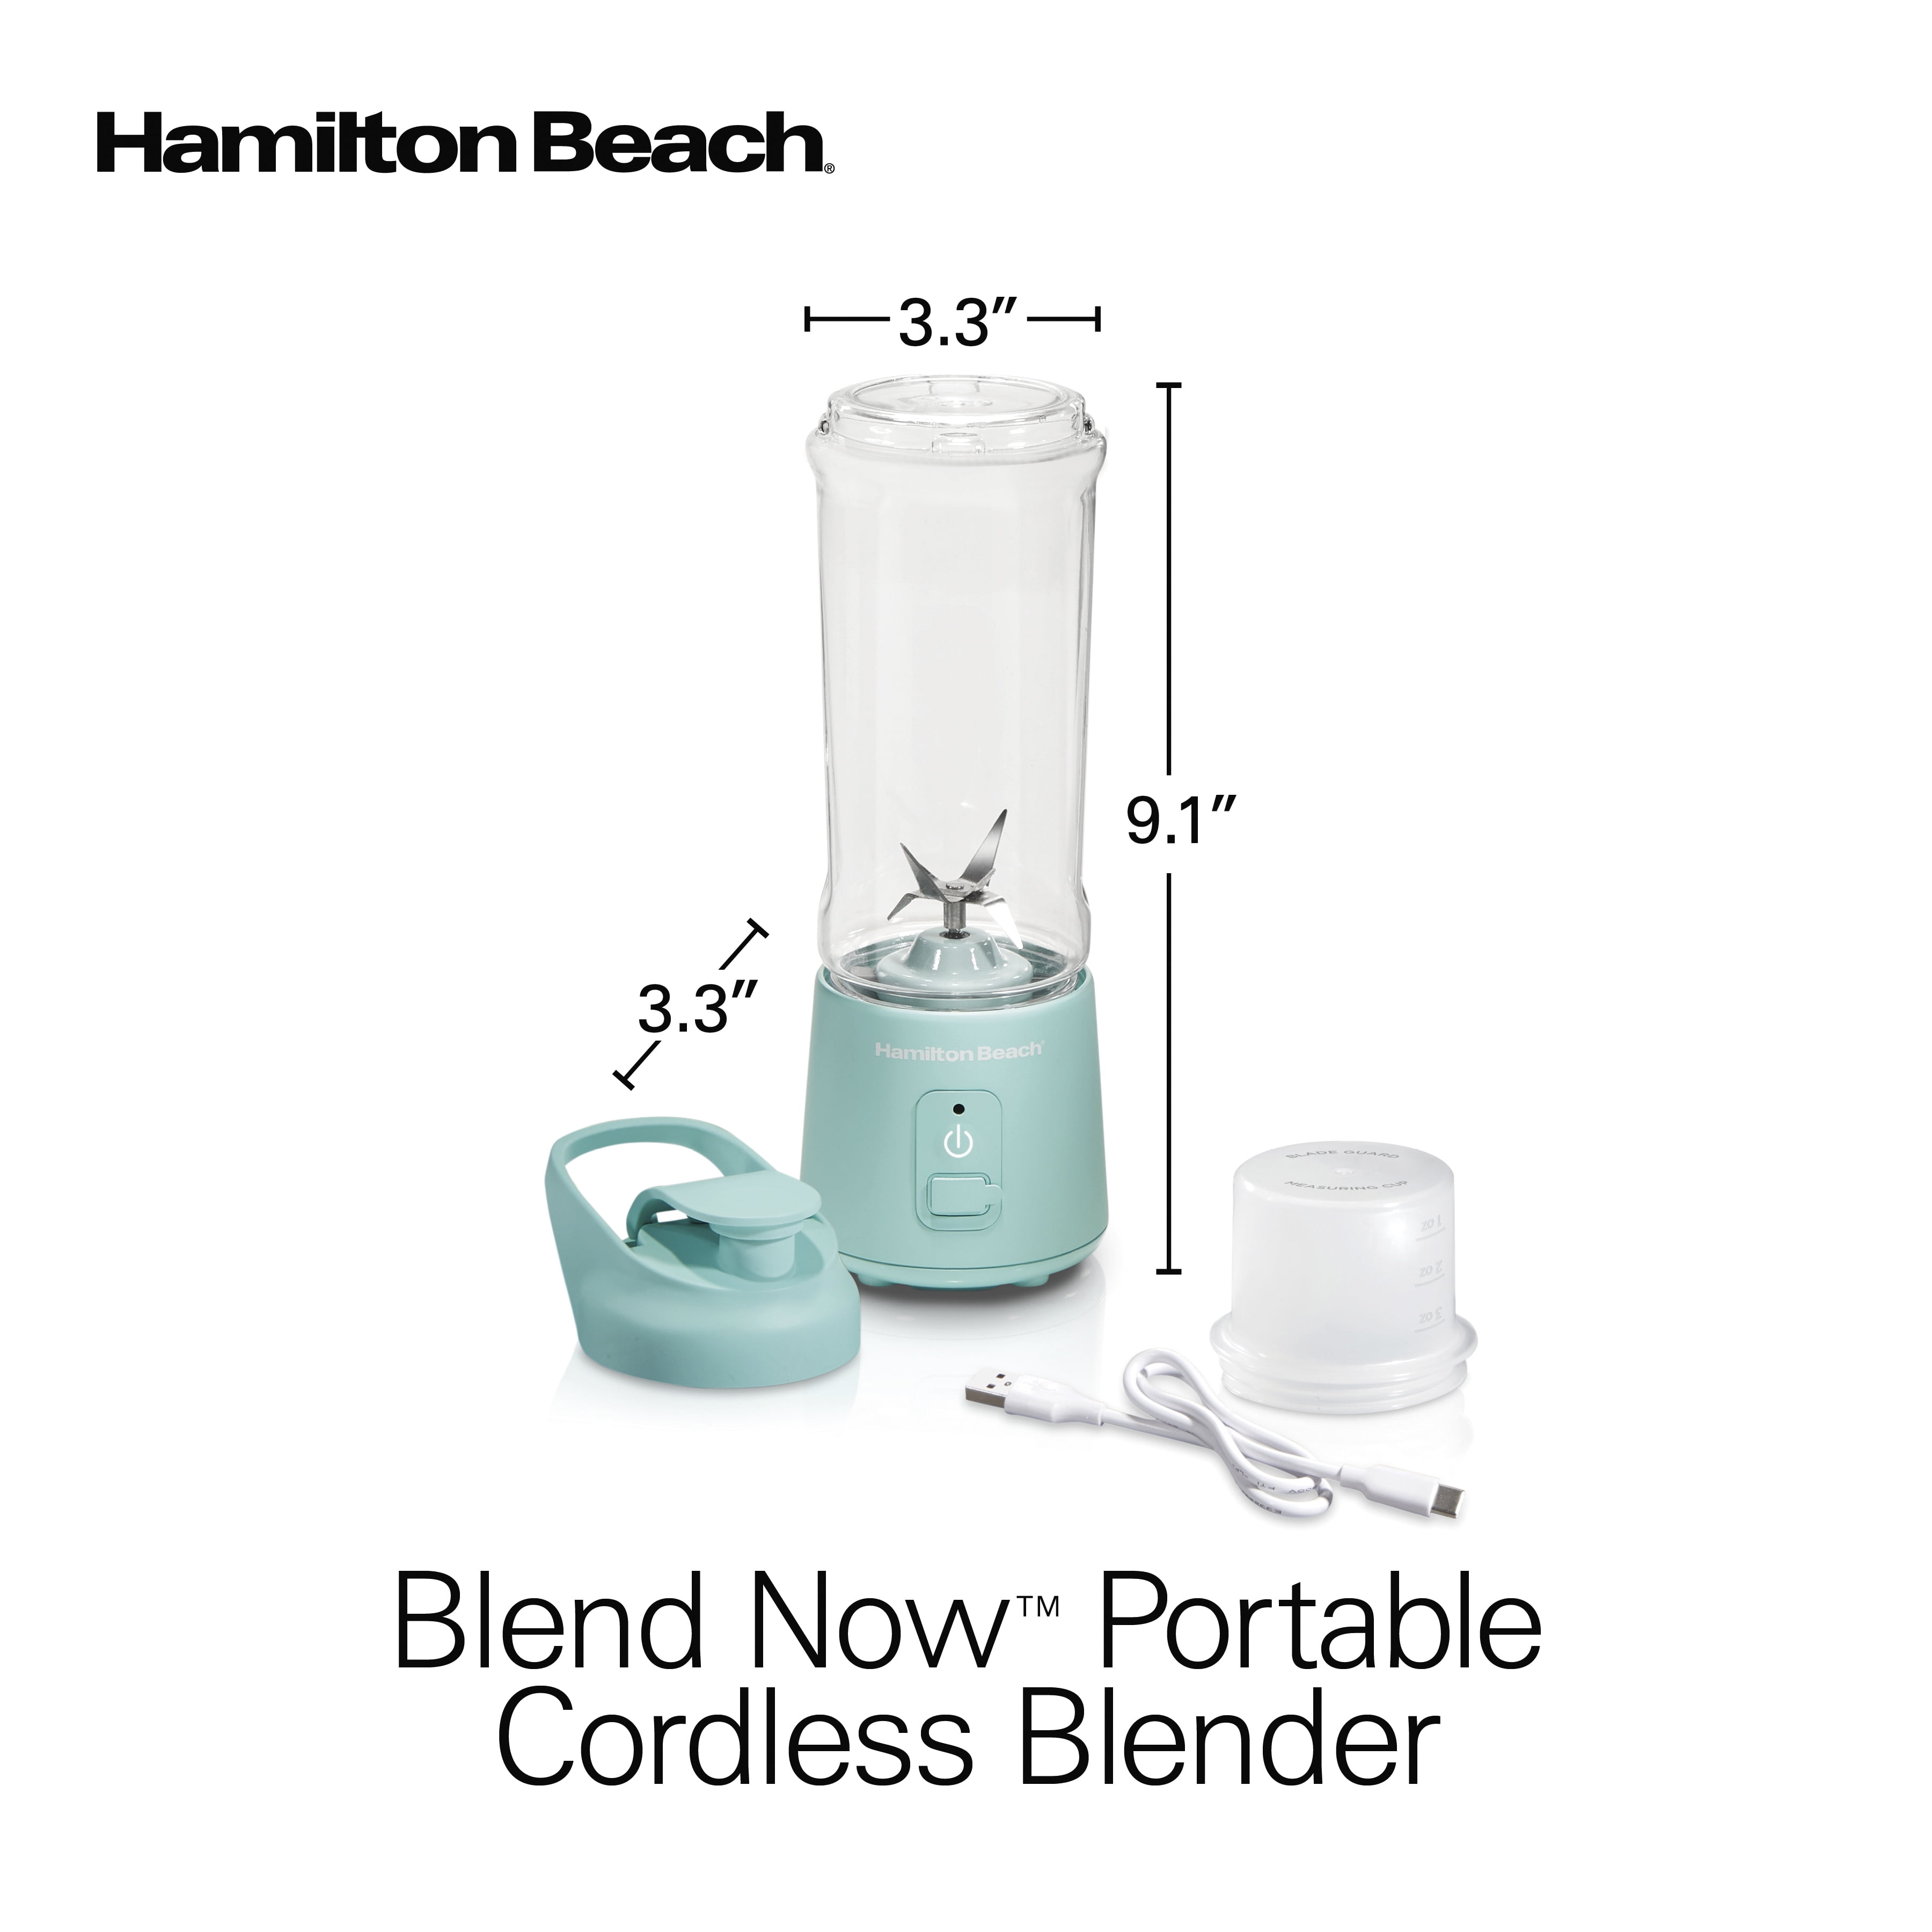 Hamilton Beach Blend Now Portable Cordless Blender - Black